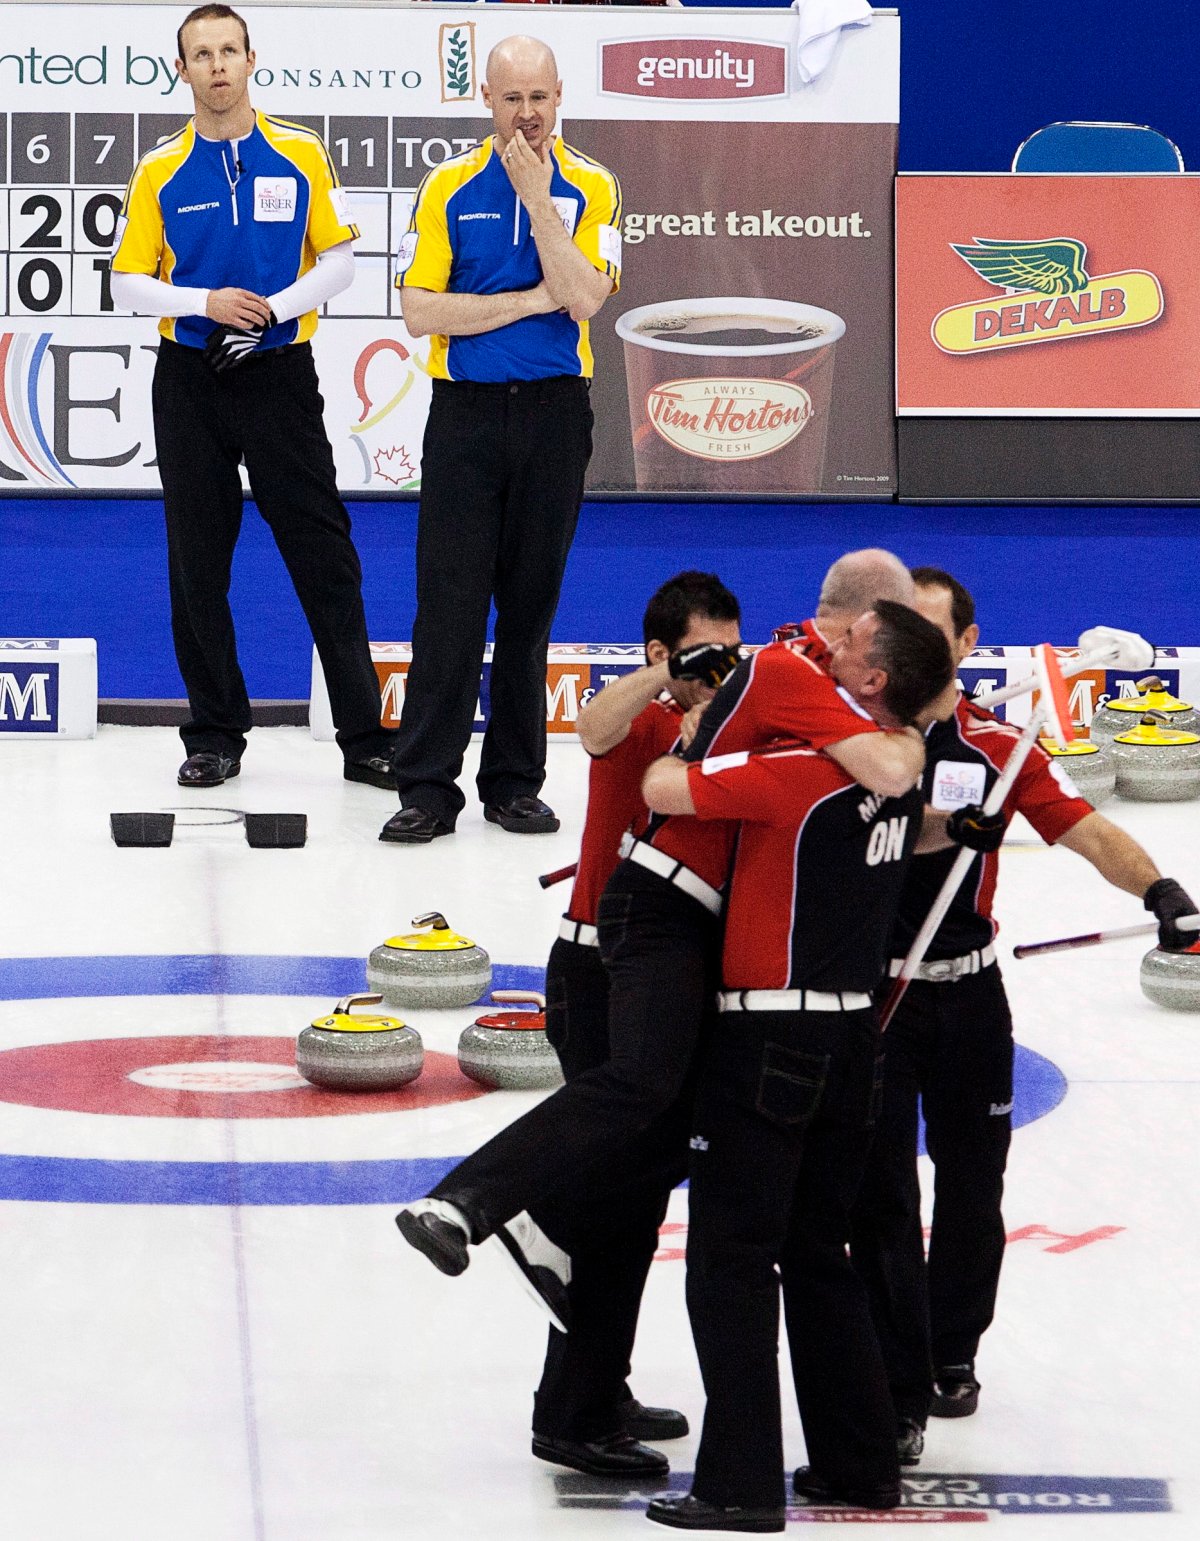 Ontario’s Howard downs Alberta’s Koe 7-6 to win Canadian curling championship - image